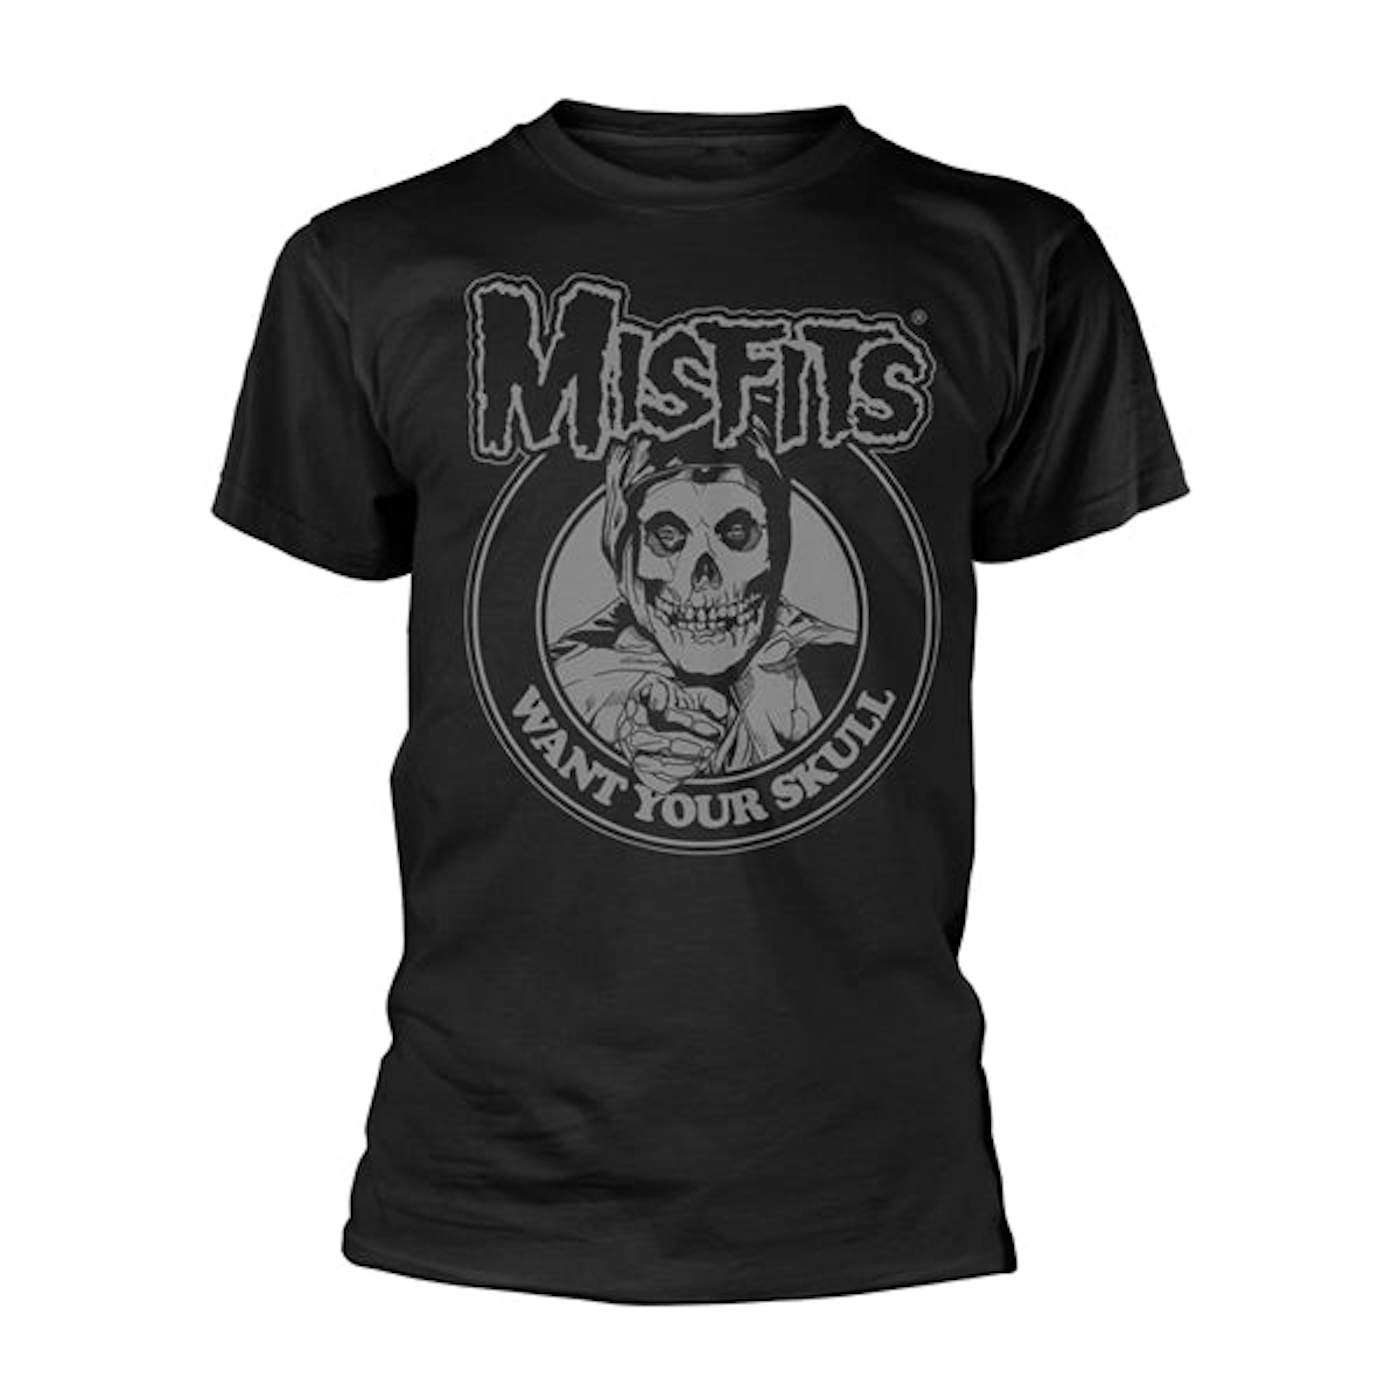 Misfits T-Shirt - Want Your Skull